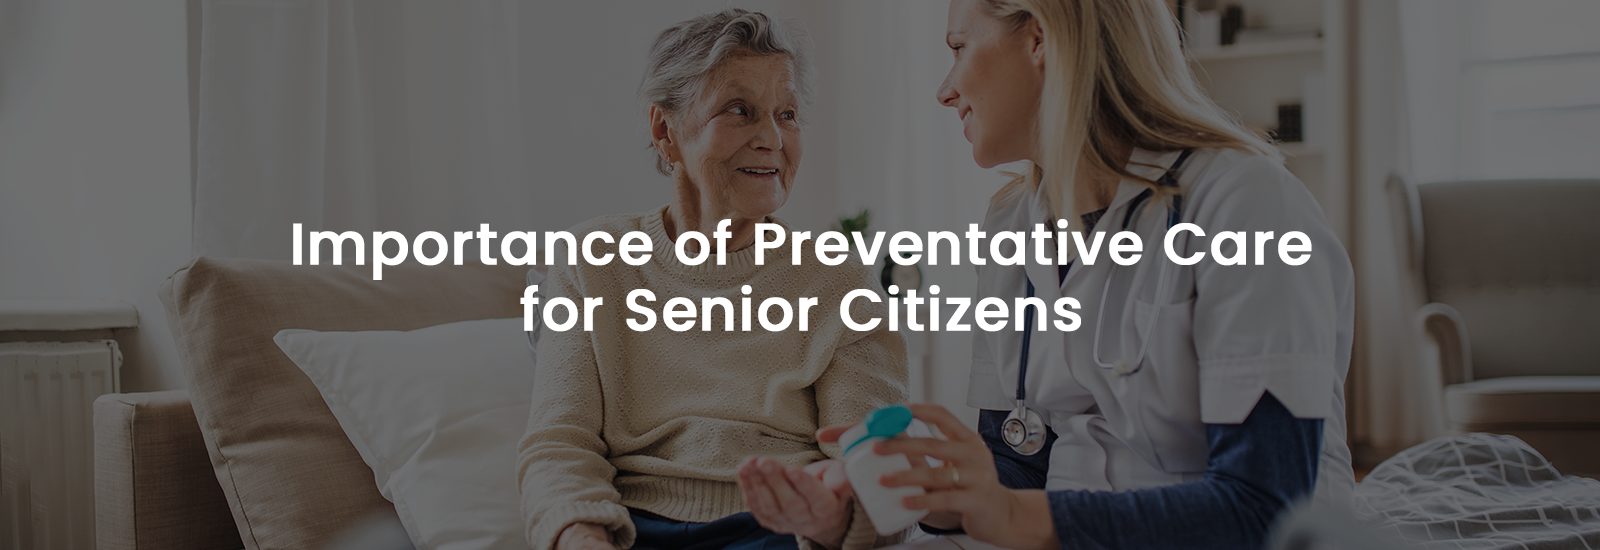 Importance of Preventative Care for Senior Citizens | Banner Image